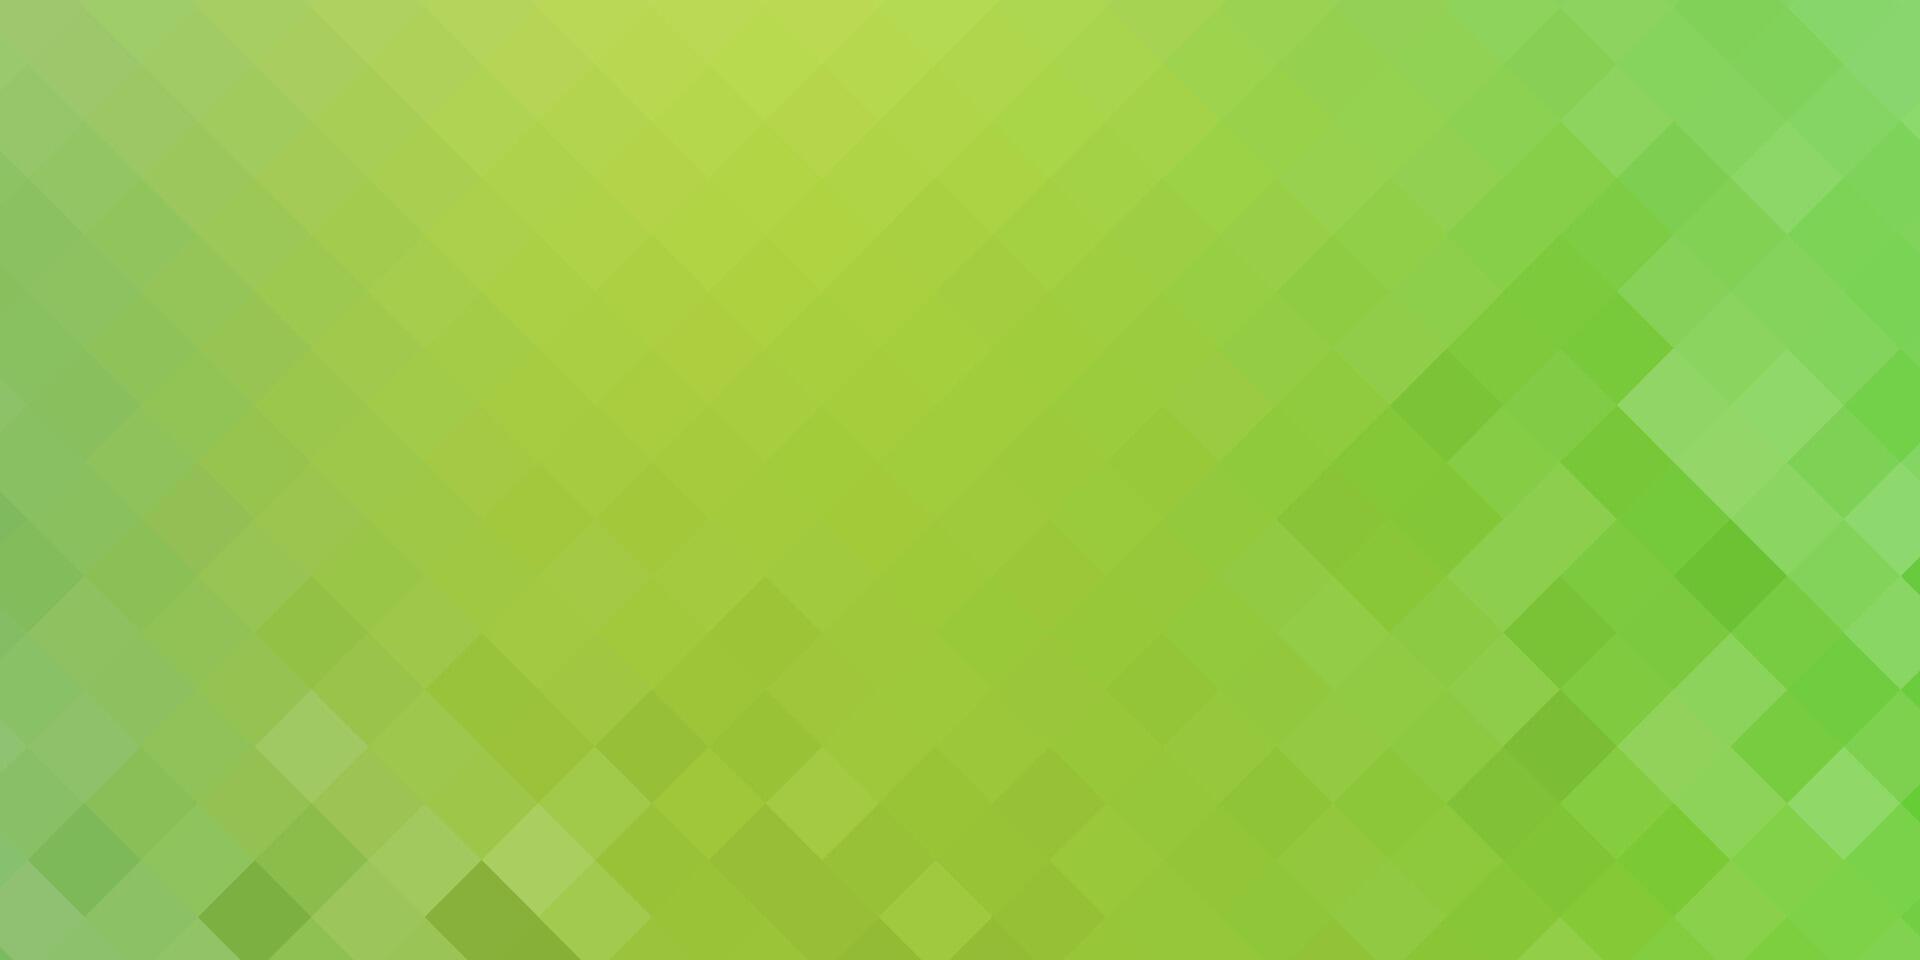 abstract green modern pixelation background vector